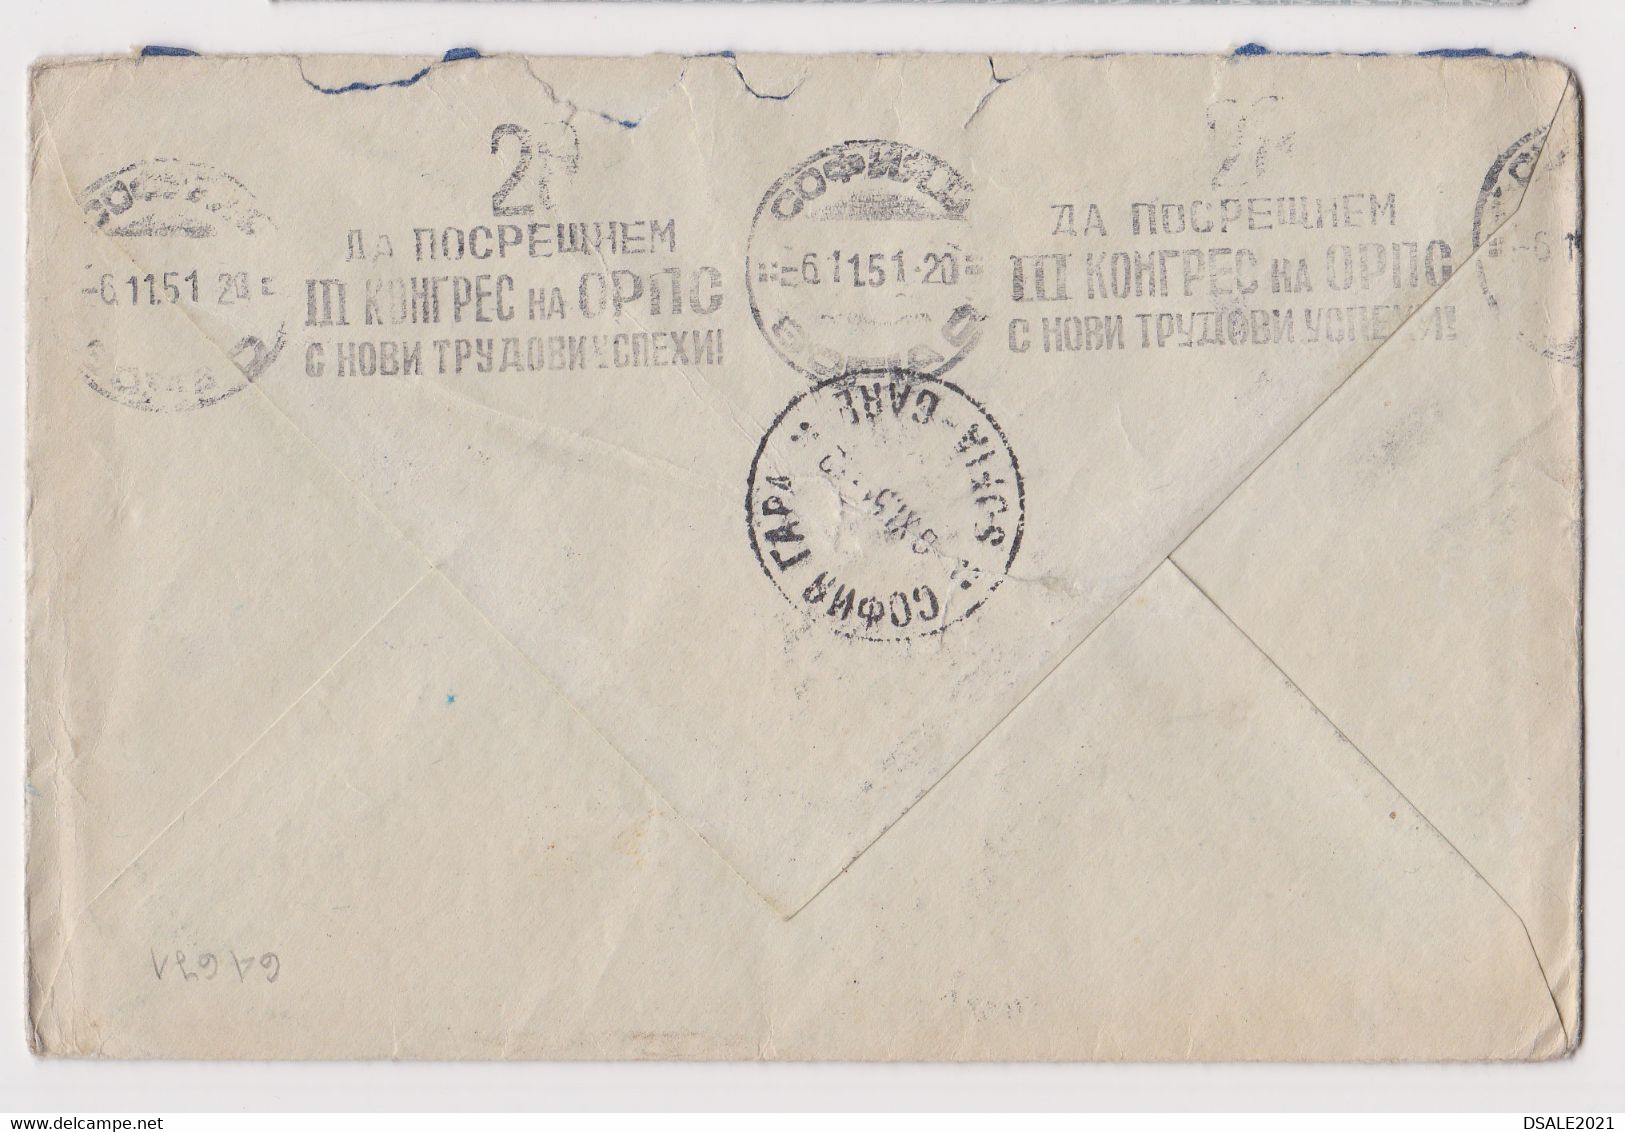 Russia USSR URSS Sowjetunion Soviet Union 1951 Cover, Brief, W/Mi-Nr.1590(40k.)-Koslow Orange Stamp To Bulgaria (64671) - Covers & Documents